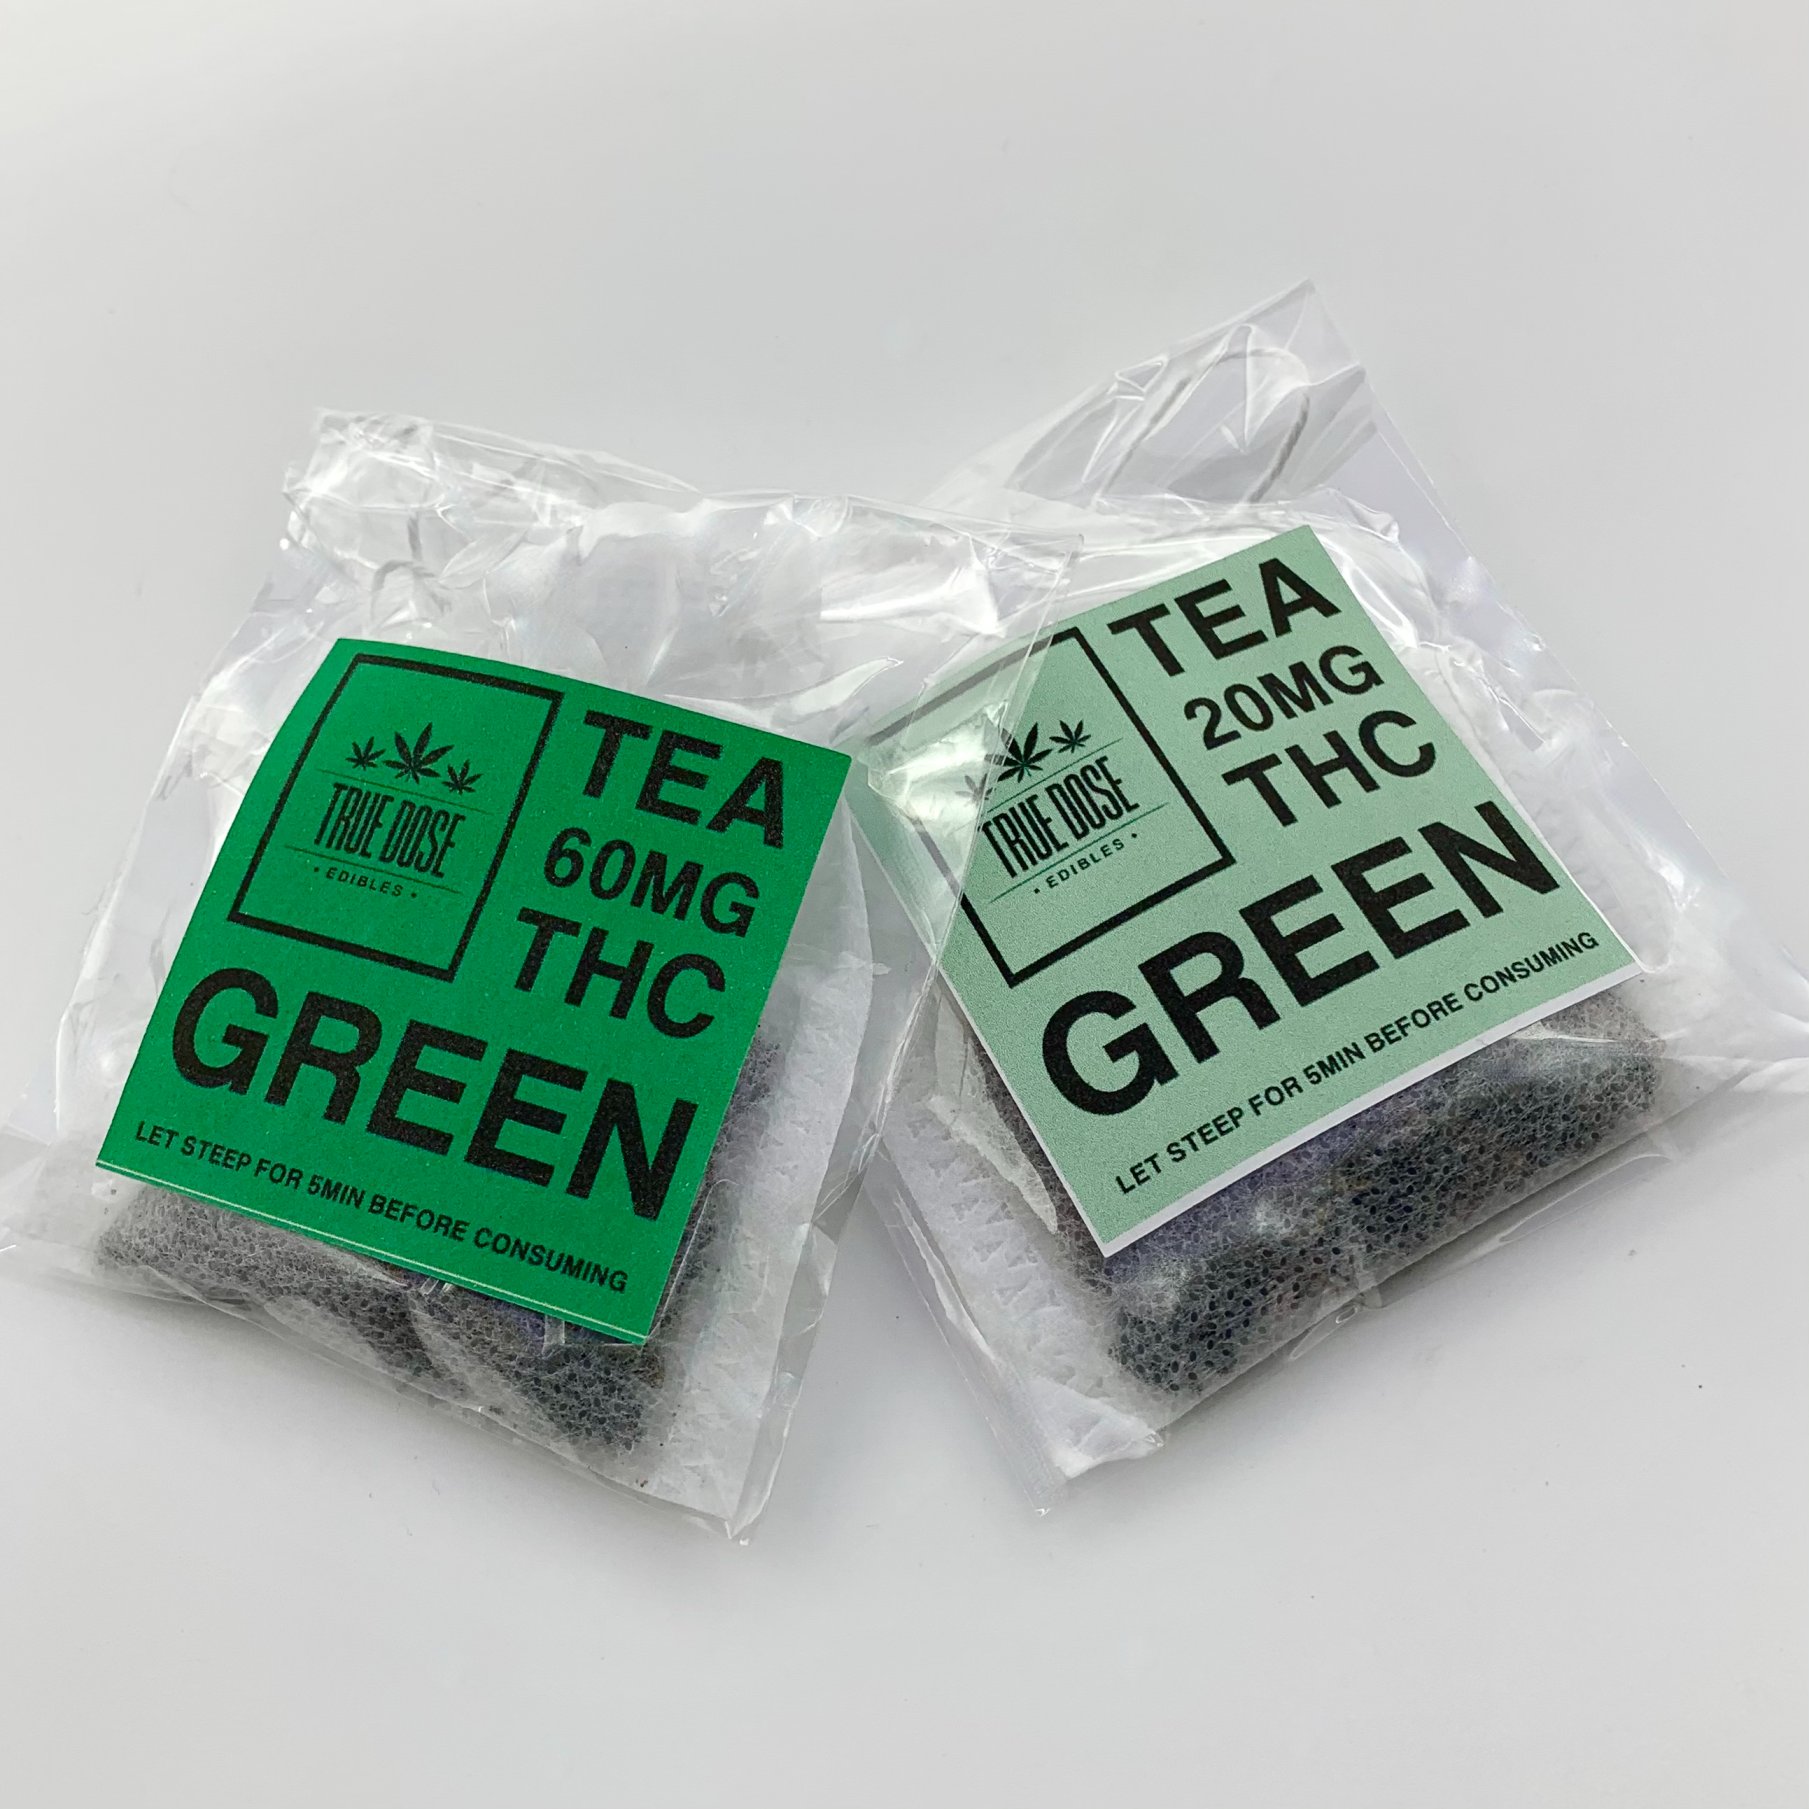 Green Tea: THC